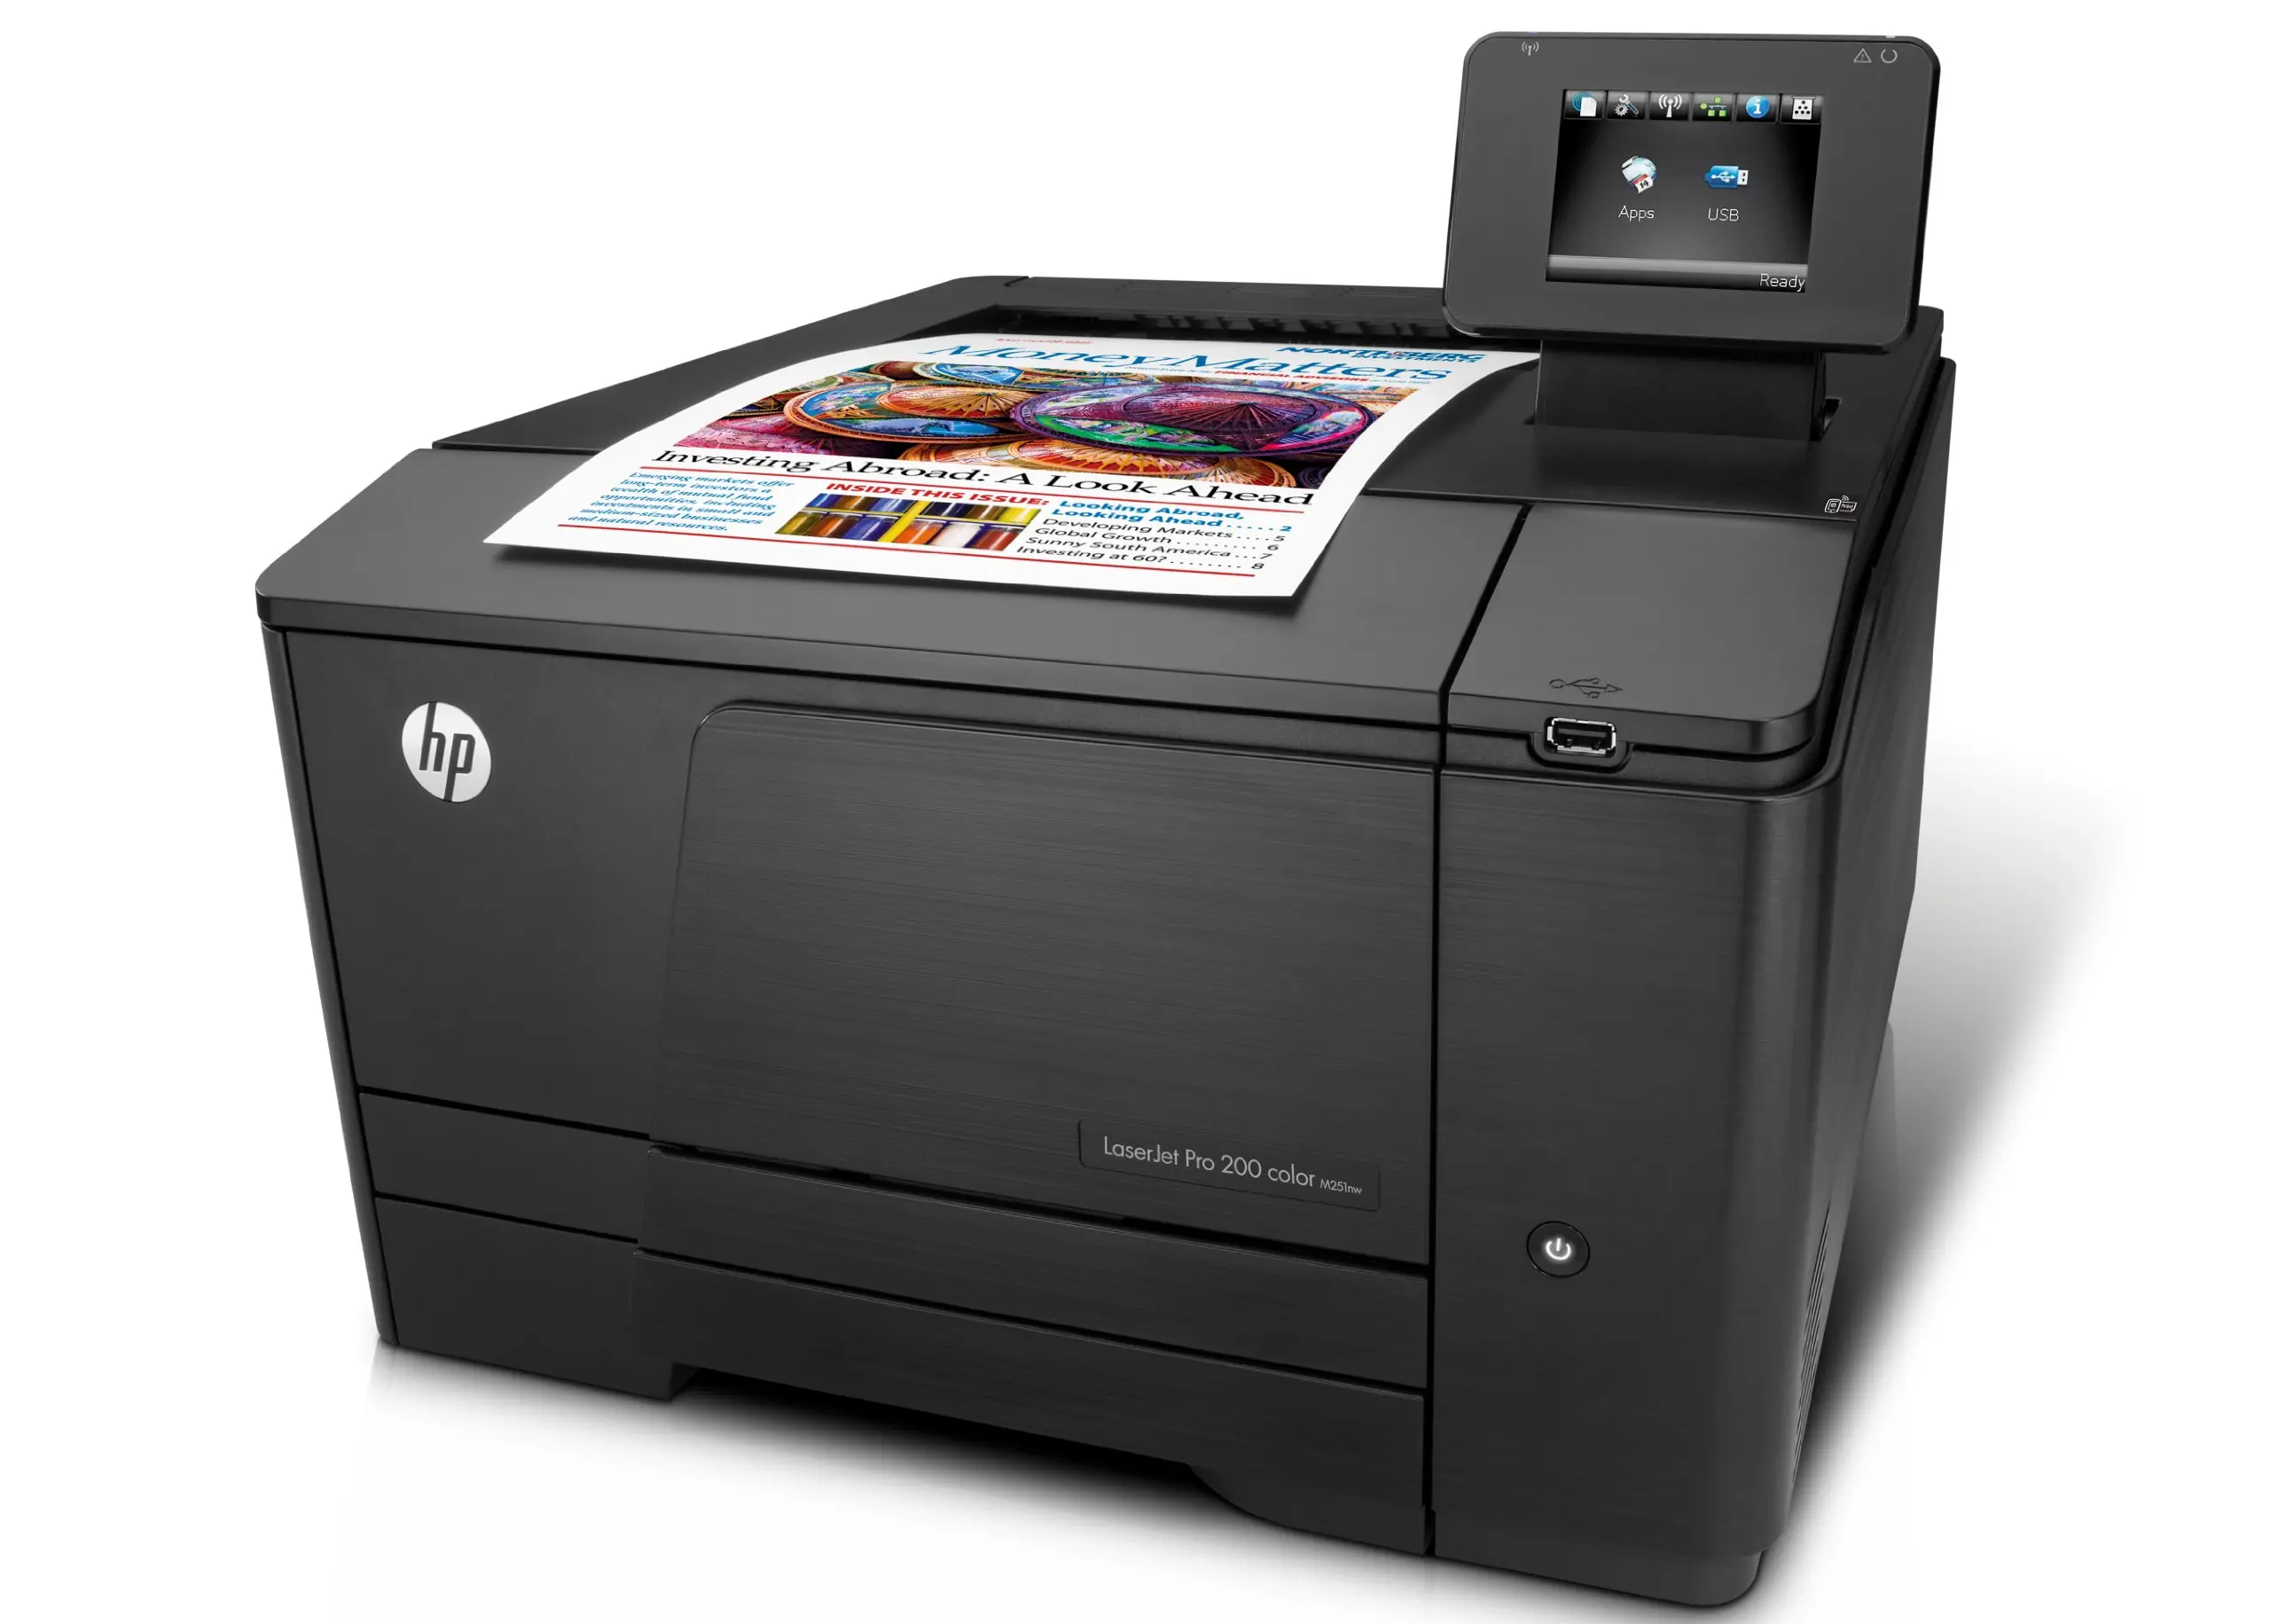 hewlett packard laserjet pro 200 color m251nw wireless printer review - How do I clean my HP LaserJet Pro 200 M251nw